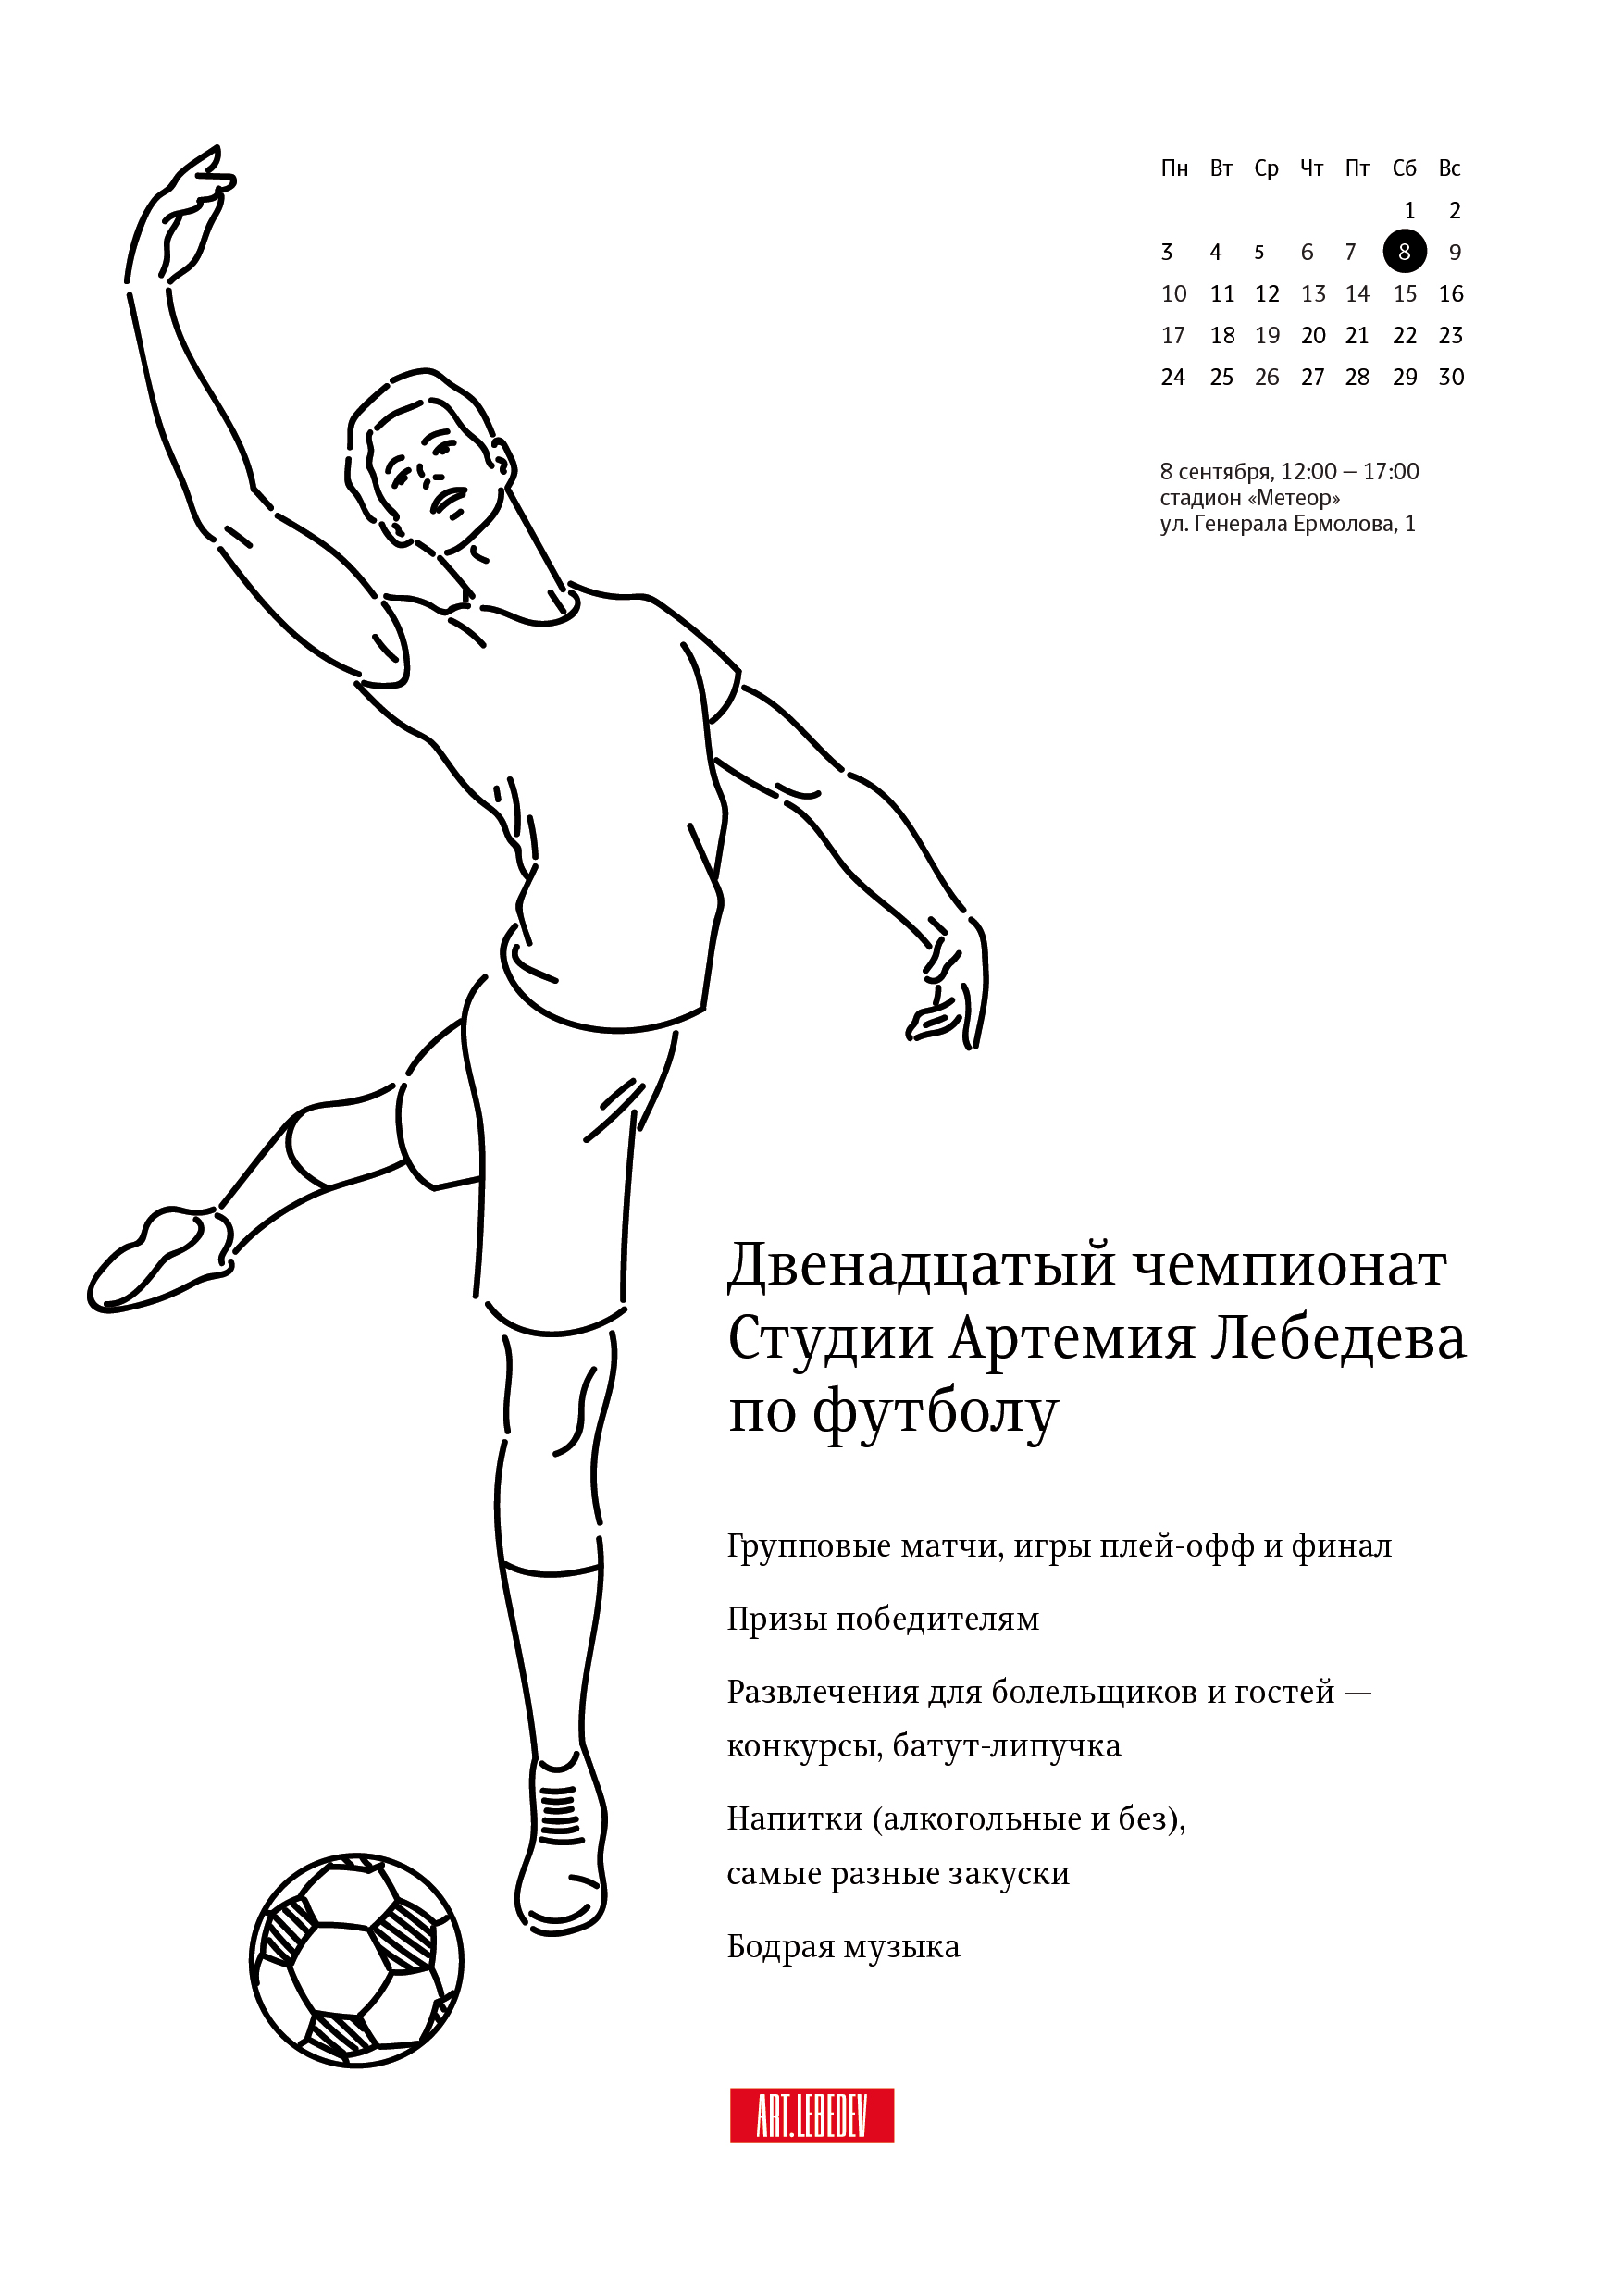 football poster 2018 06